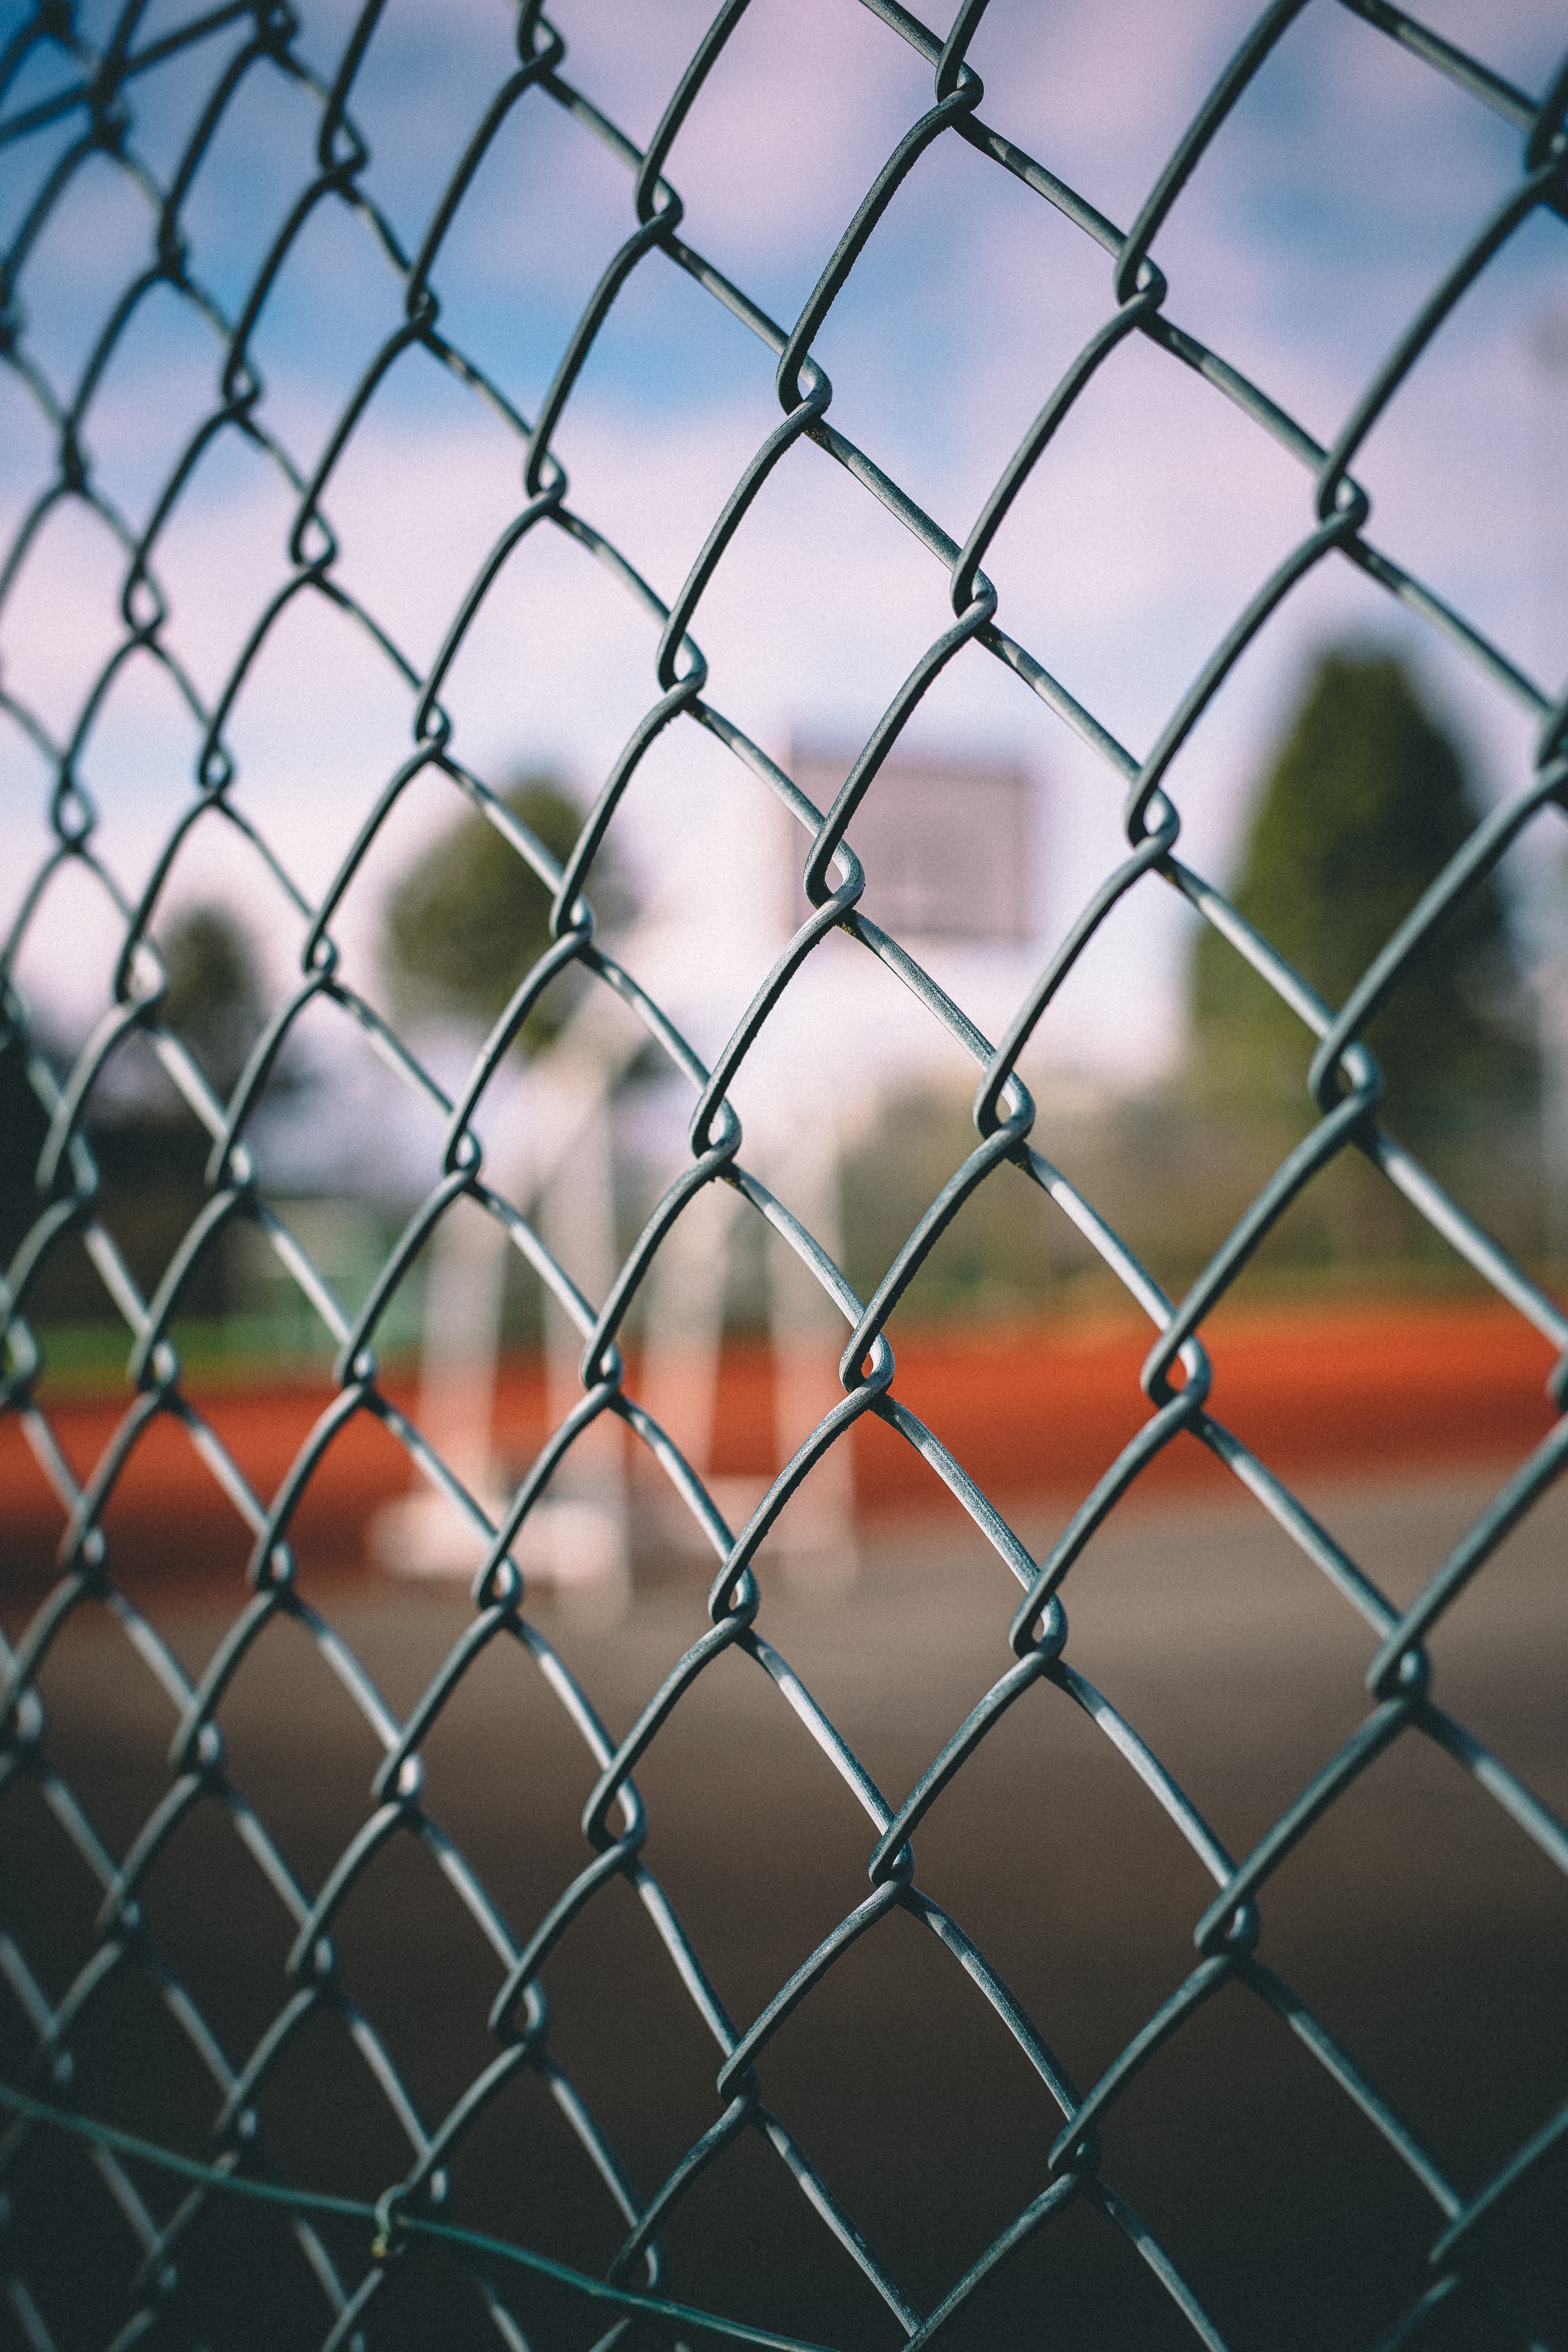 Fence fencing, blur, enclosure, miscellanea Free Stock Photos